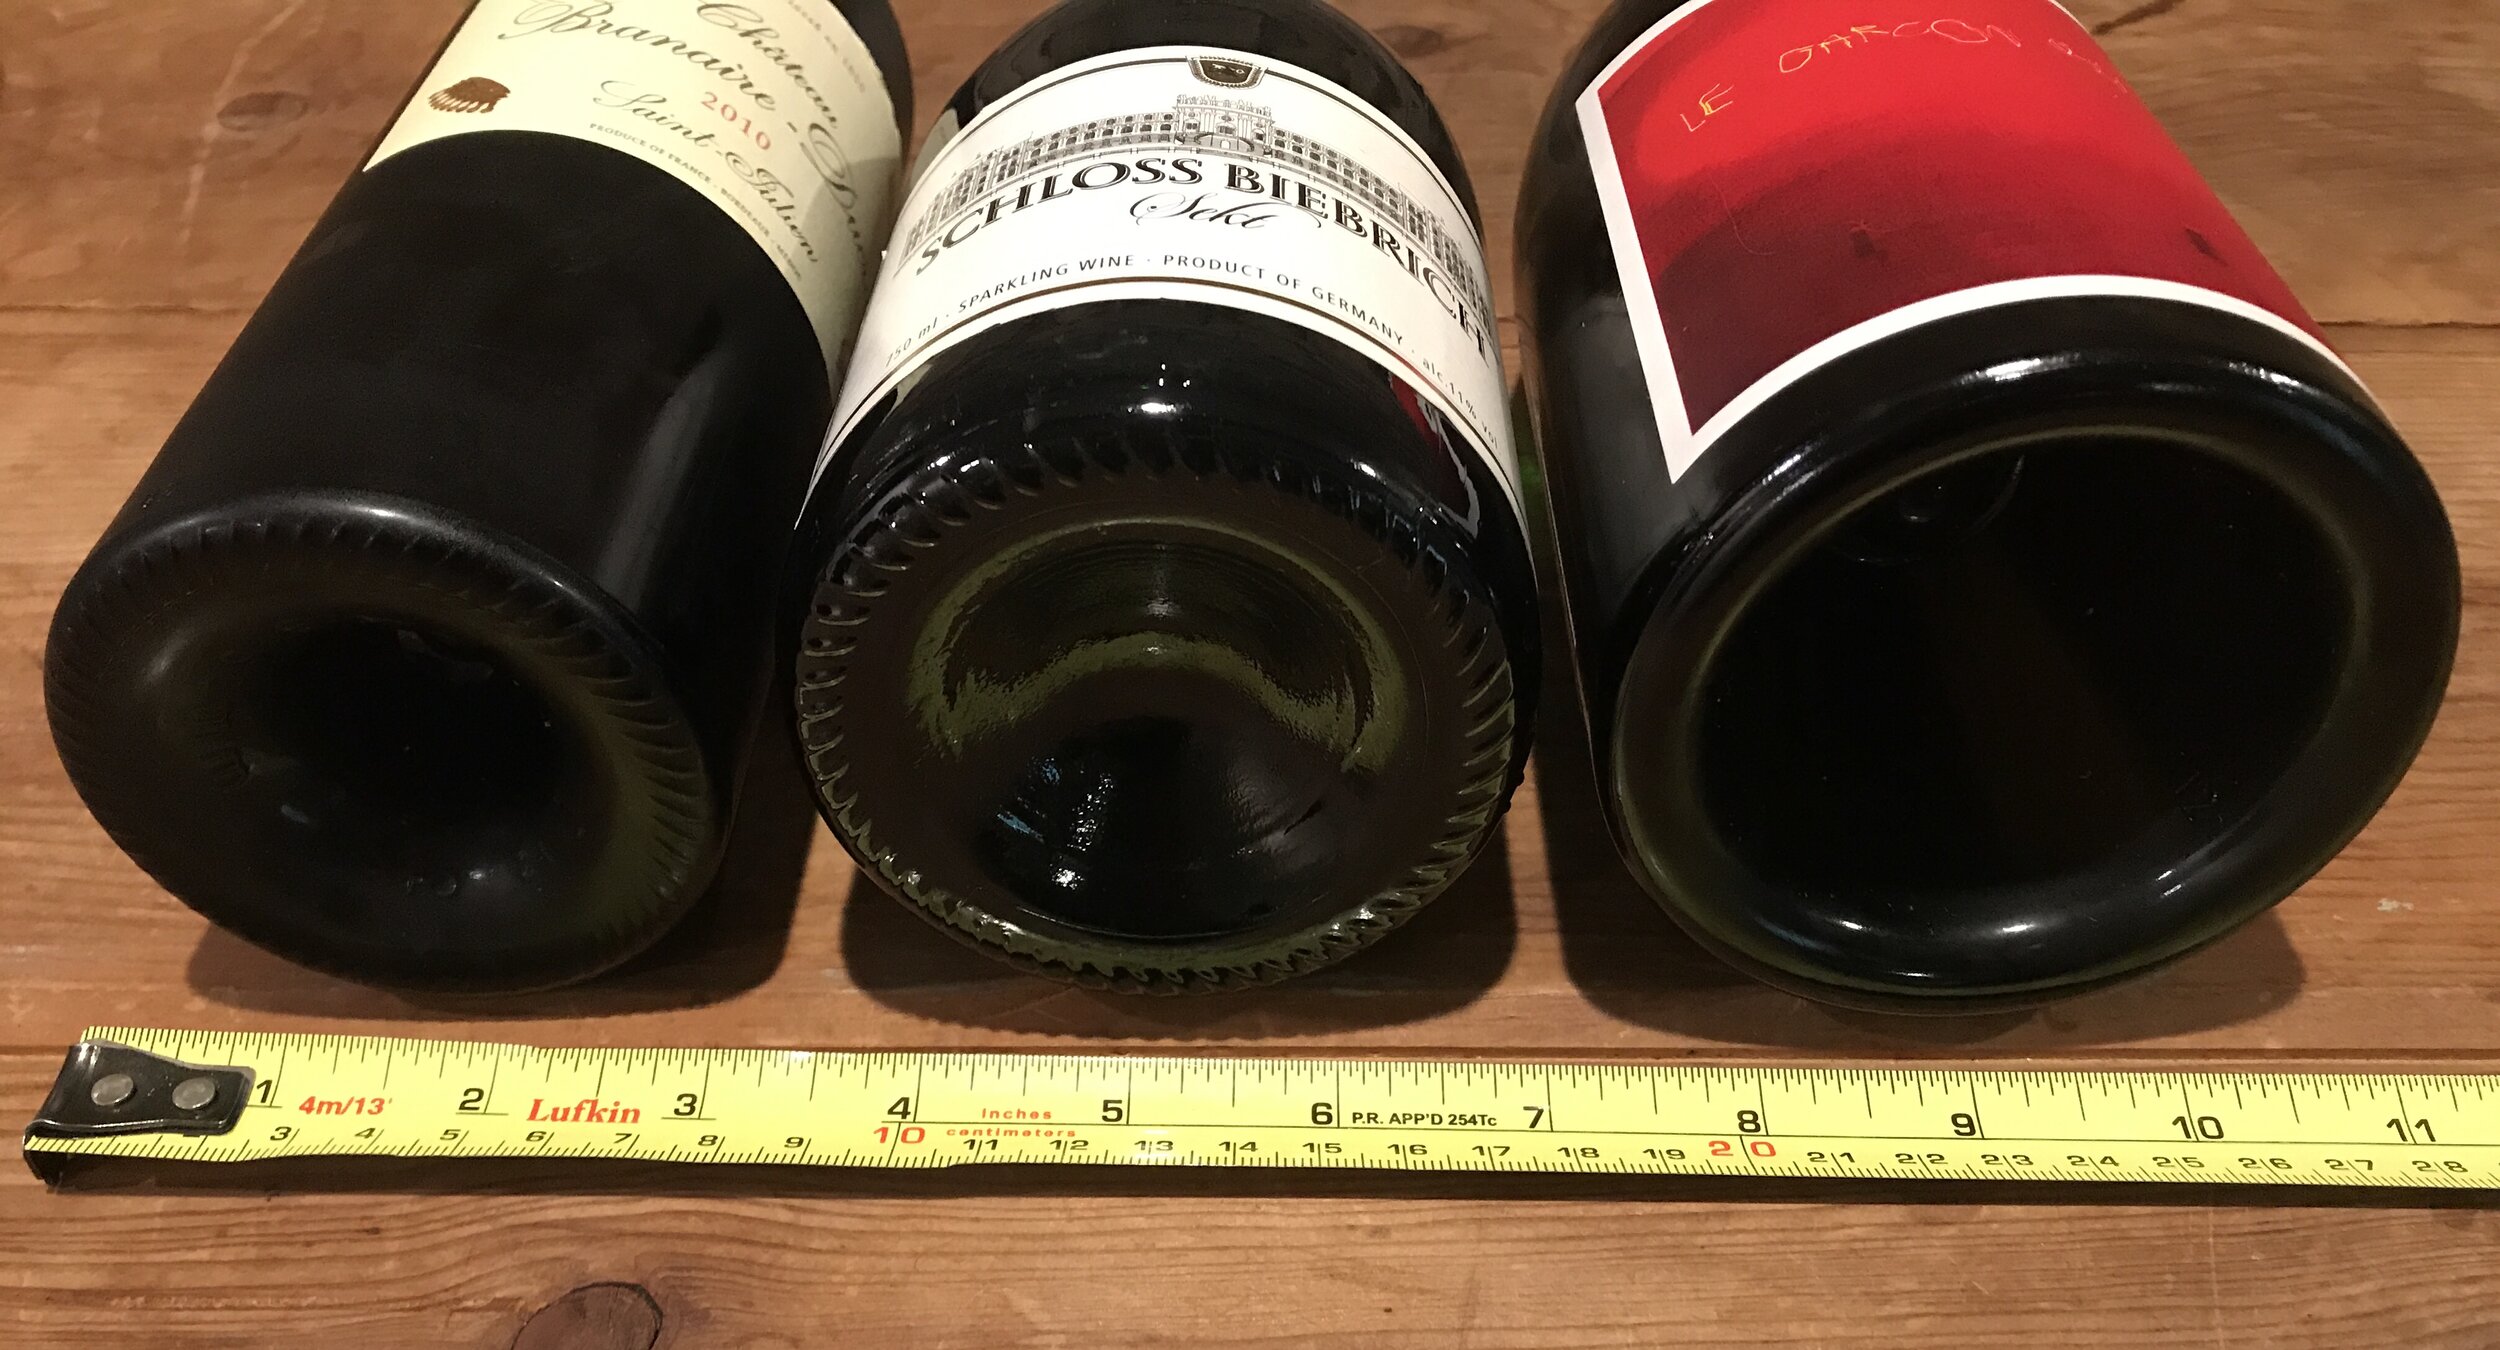 Wine Stopper Wine Chiller Wine Foil Remover Stainless Steel Wine Bottle Cooler Stick Sommelier Set Wine pourer Red & White Wine Accessories Gift Set N\A Wine Cooler Set 